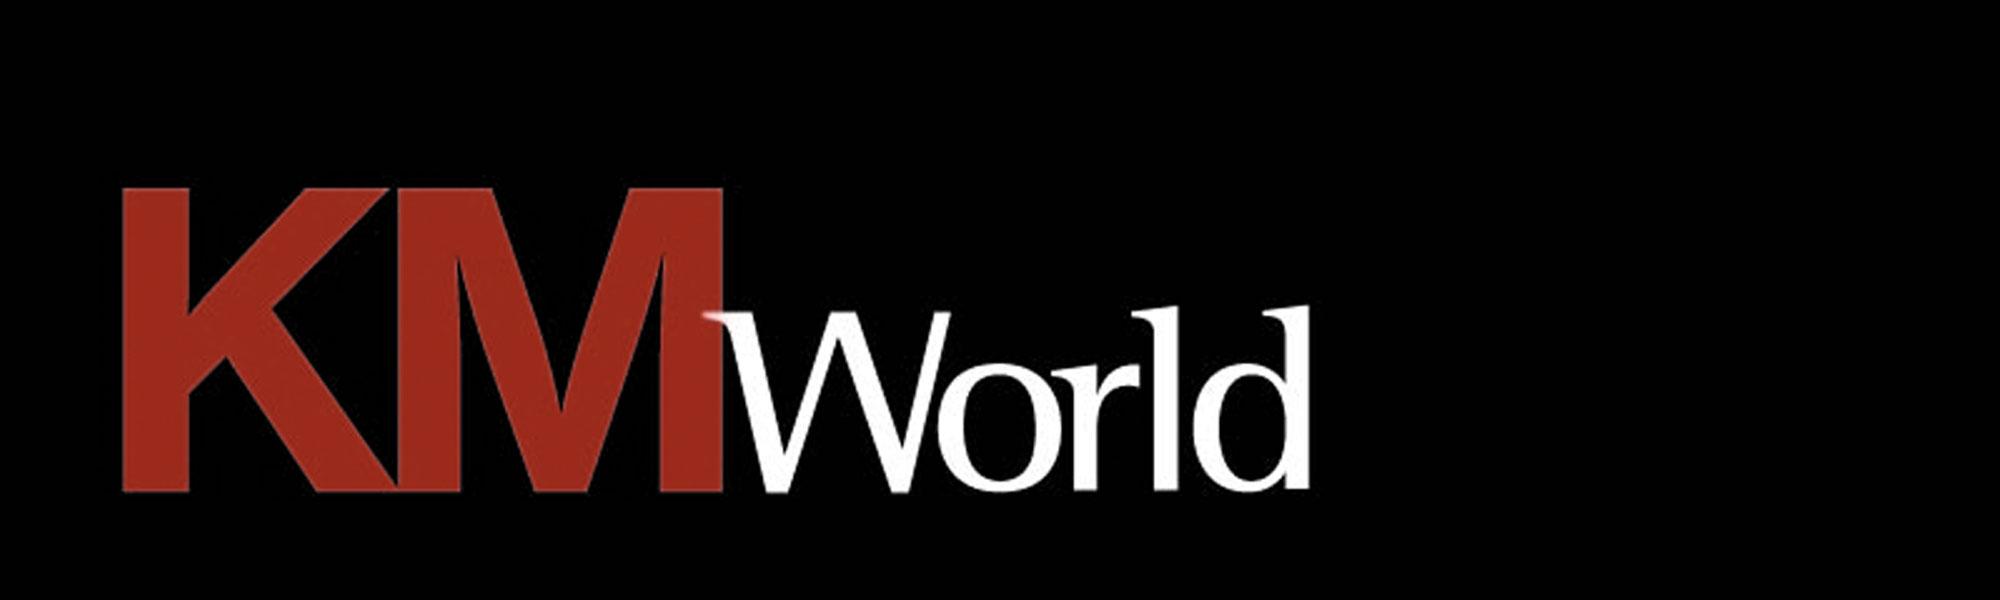 KMWorld Logo - KM World Lead Story Features MetaJure - MetaJure Knowledge Management